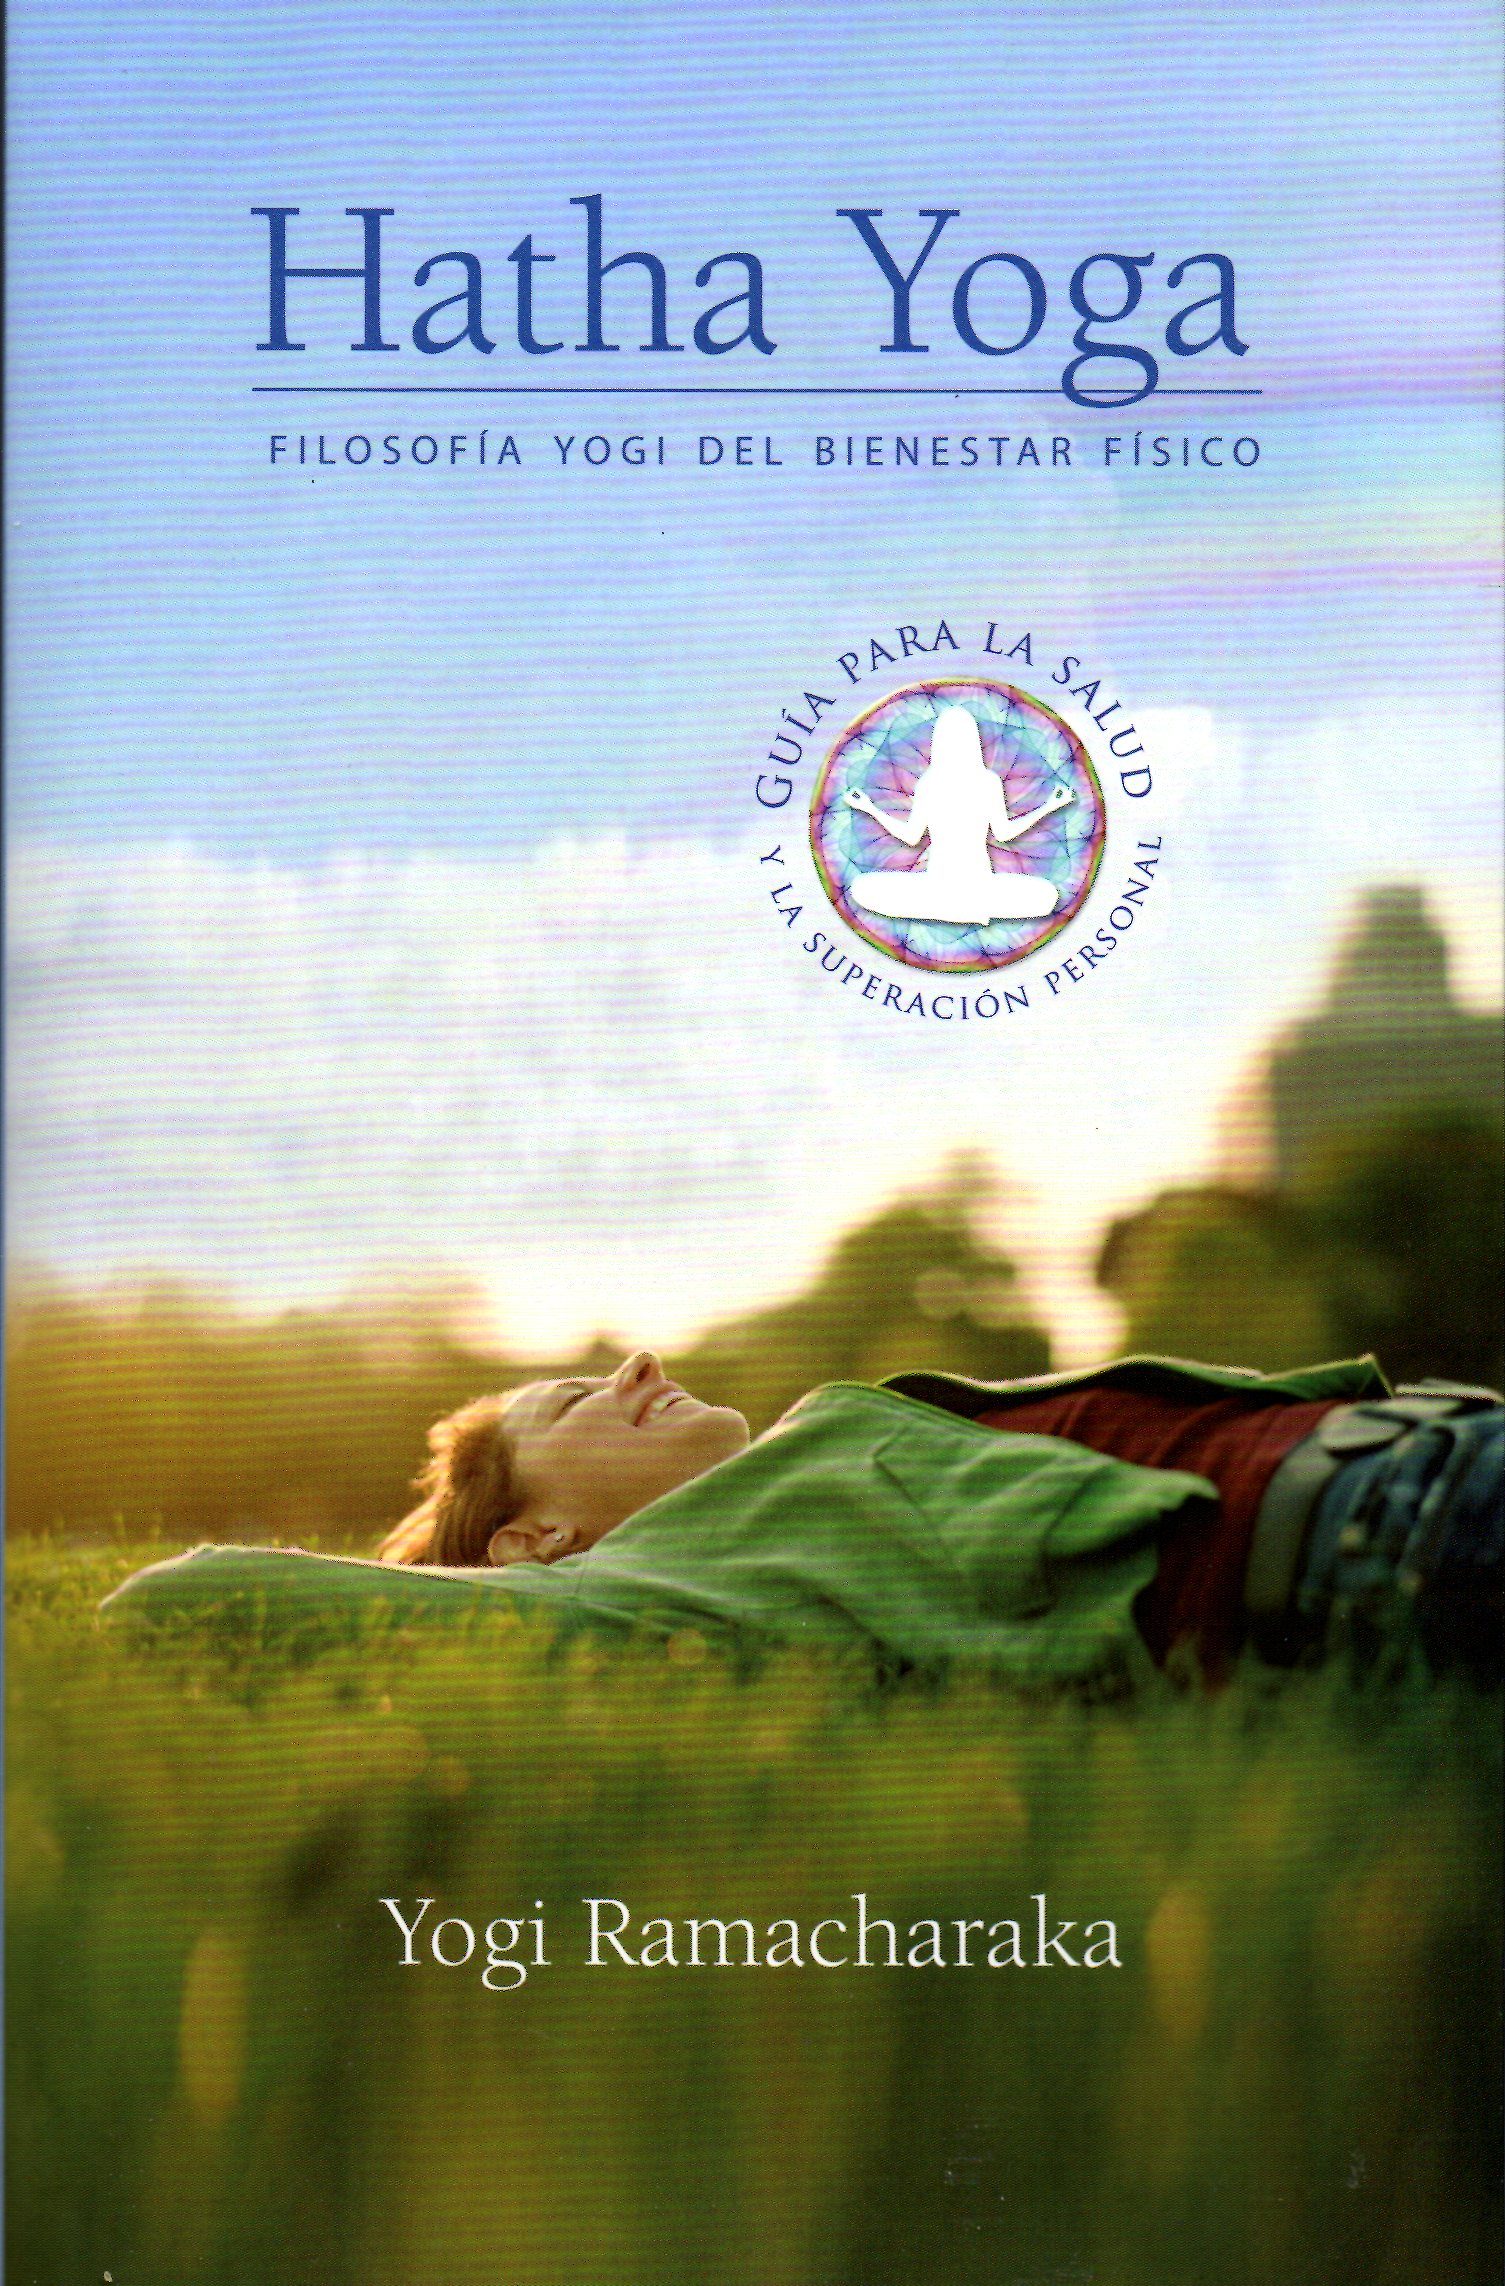 Hatha yoga book pdf free download